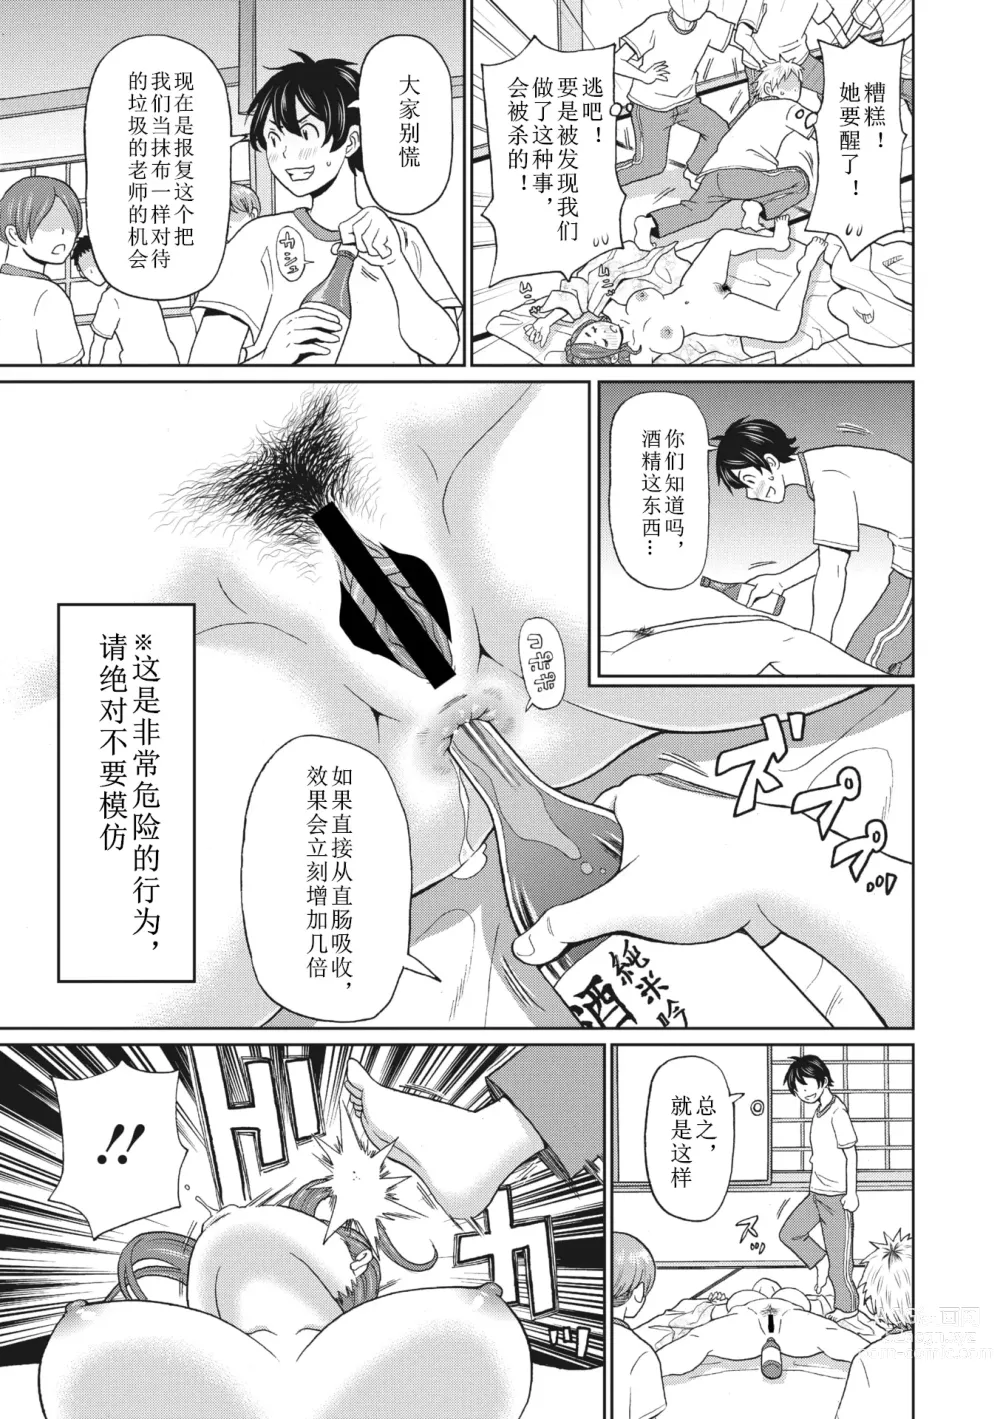 Page 7 of manga Yoidore Spartan